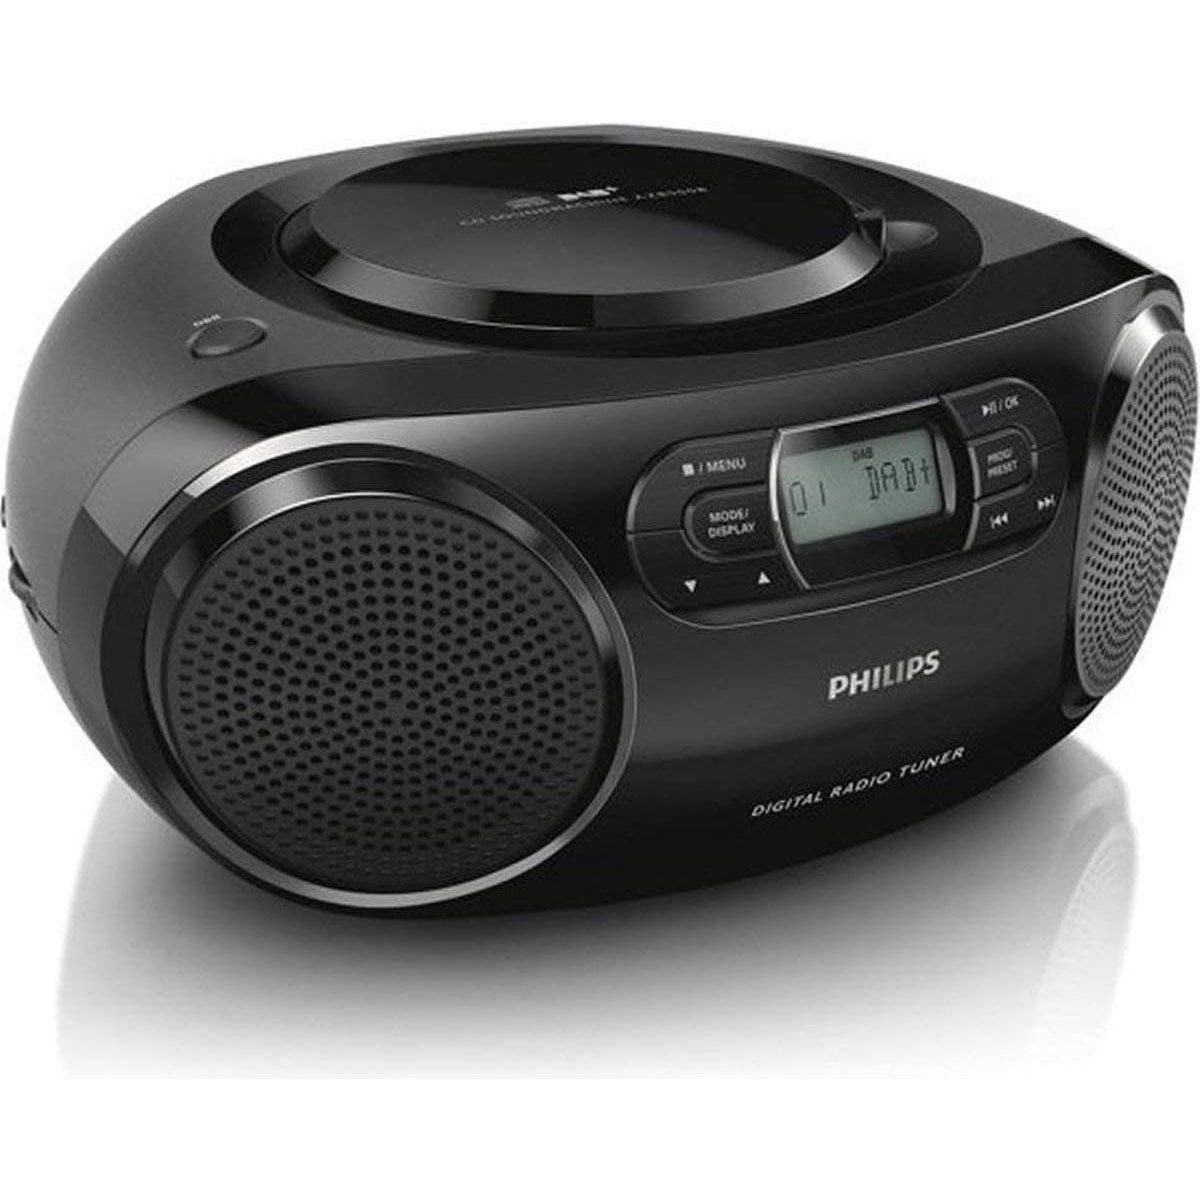 Philips CD Player AZB500/12 DAB + Radio - Black - 2020/2021 Model